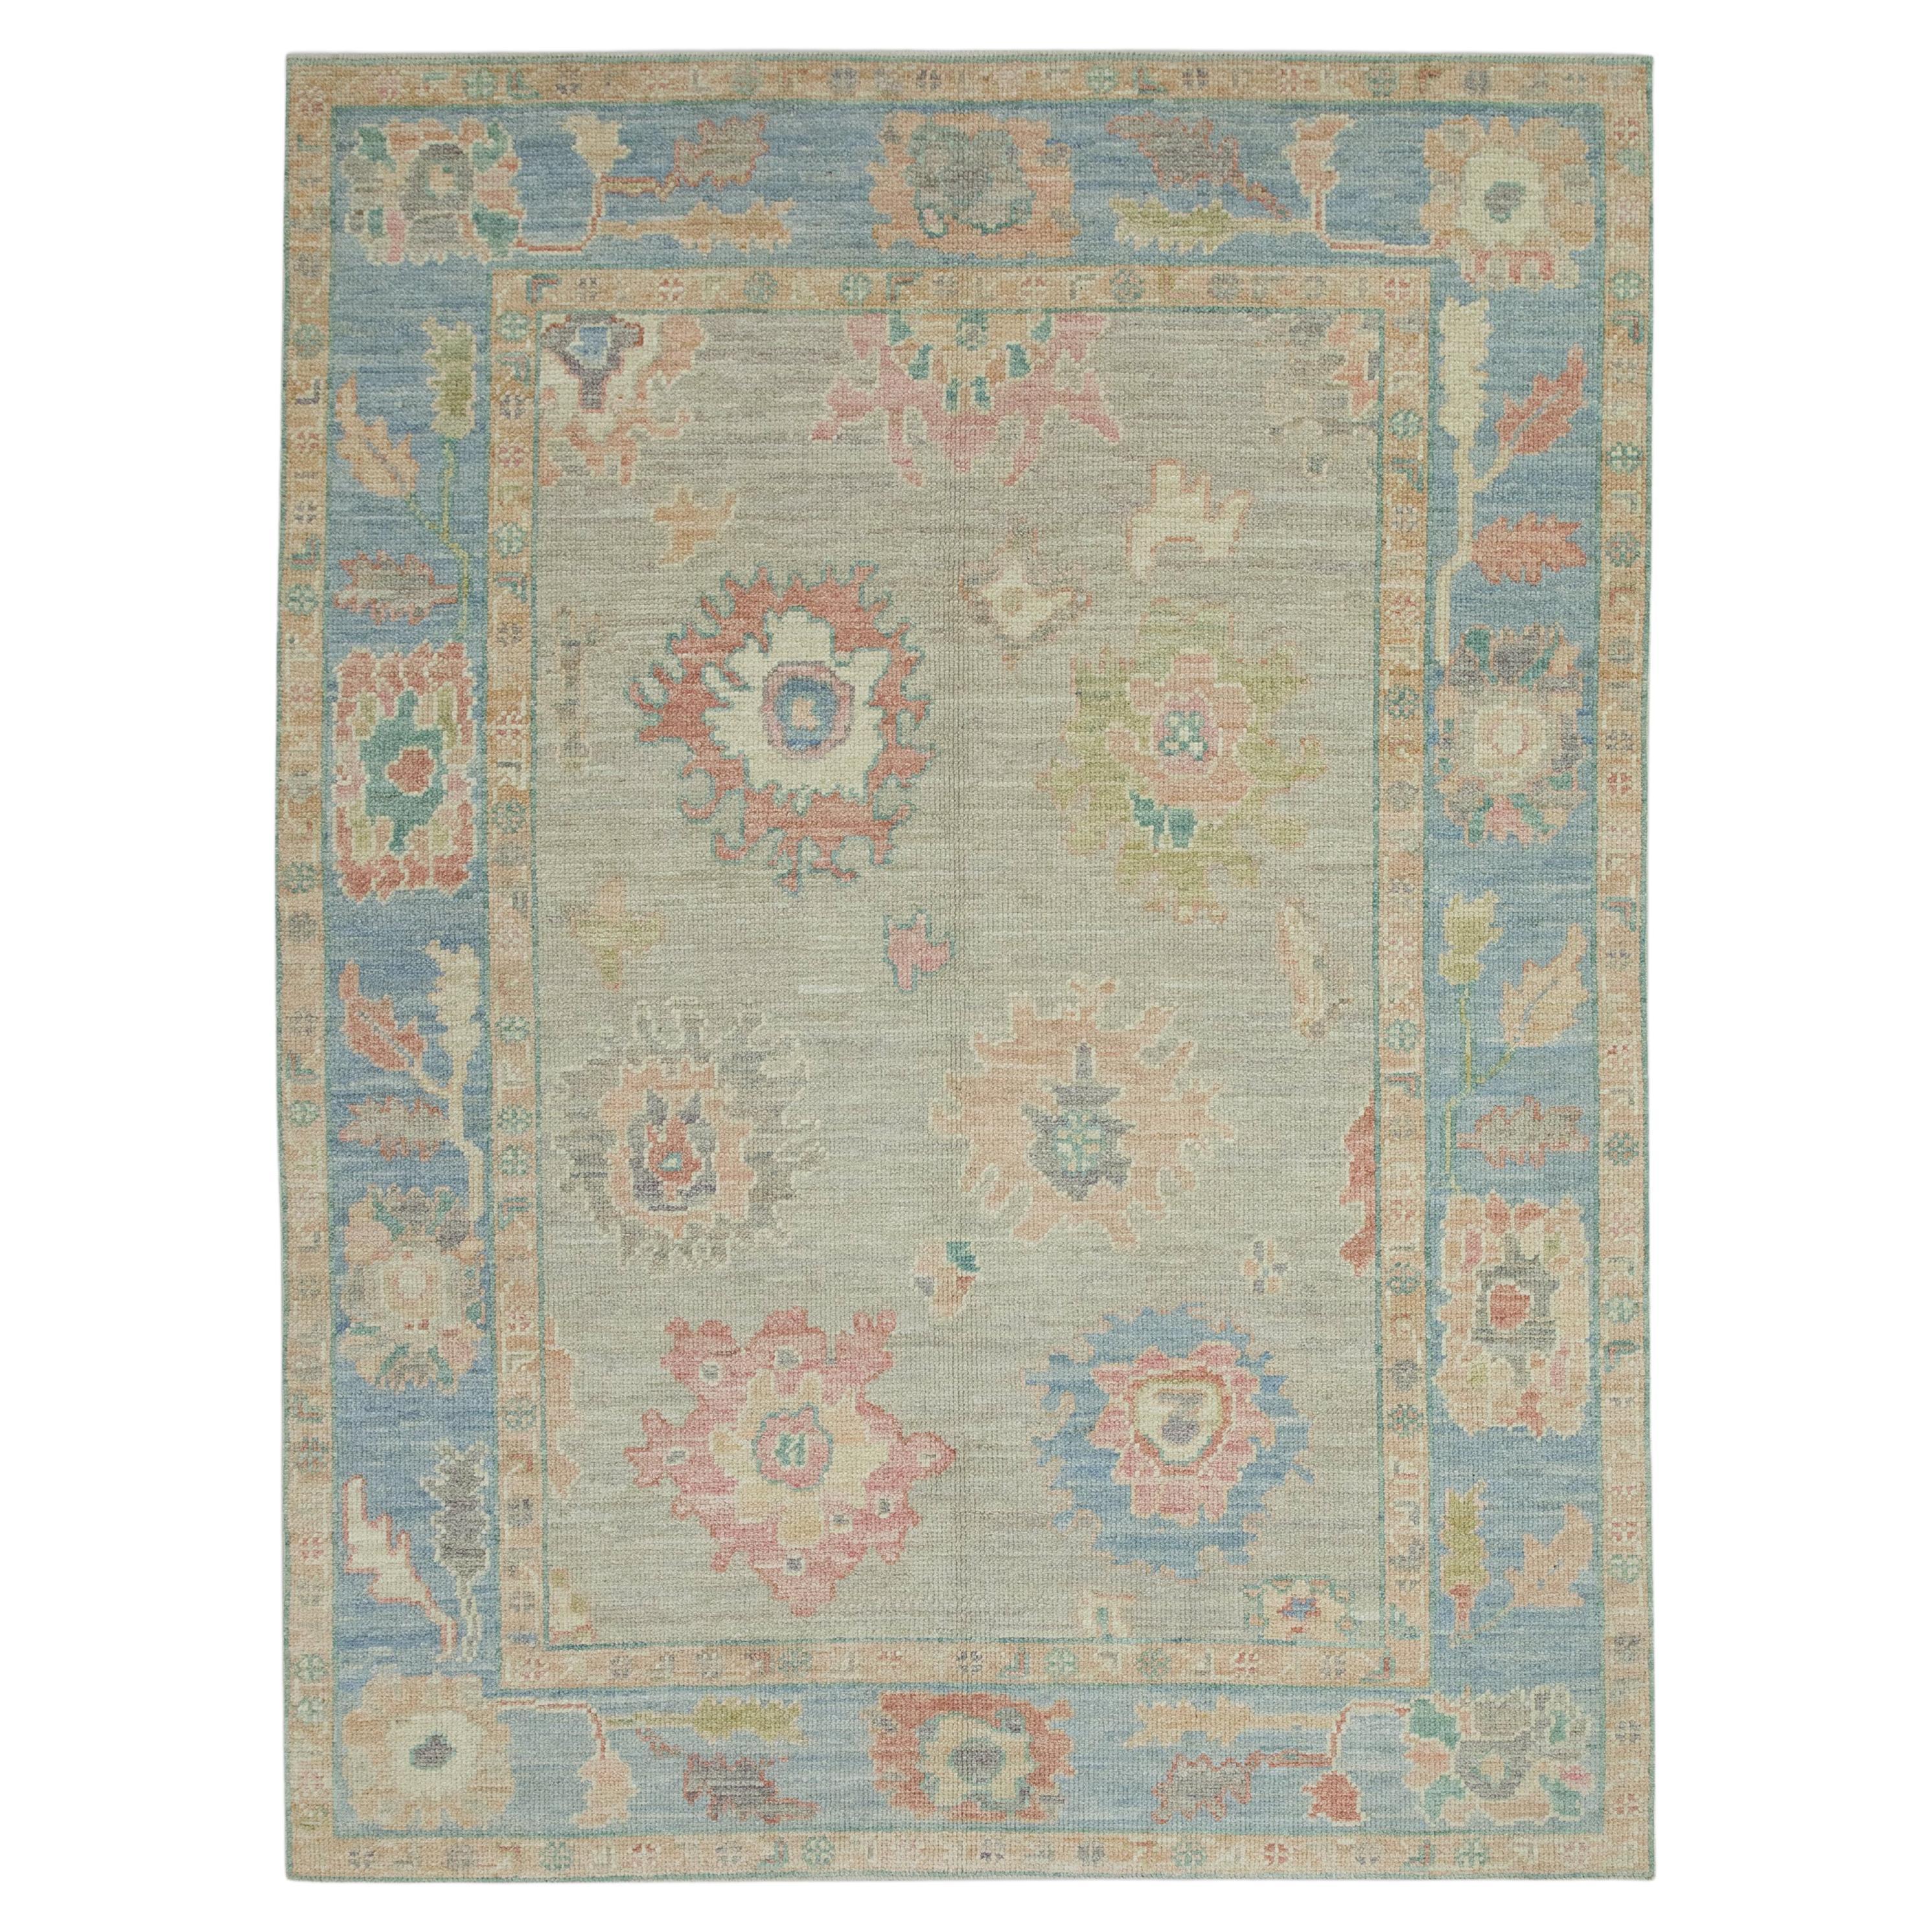 Blue Multicolor Floral Design Handwoven Wool Turkish Oushak Rug 5'1" x 6'11"